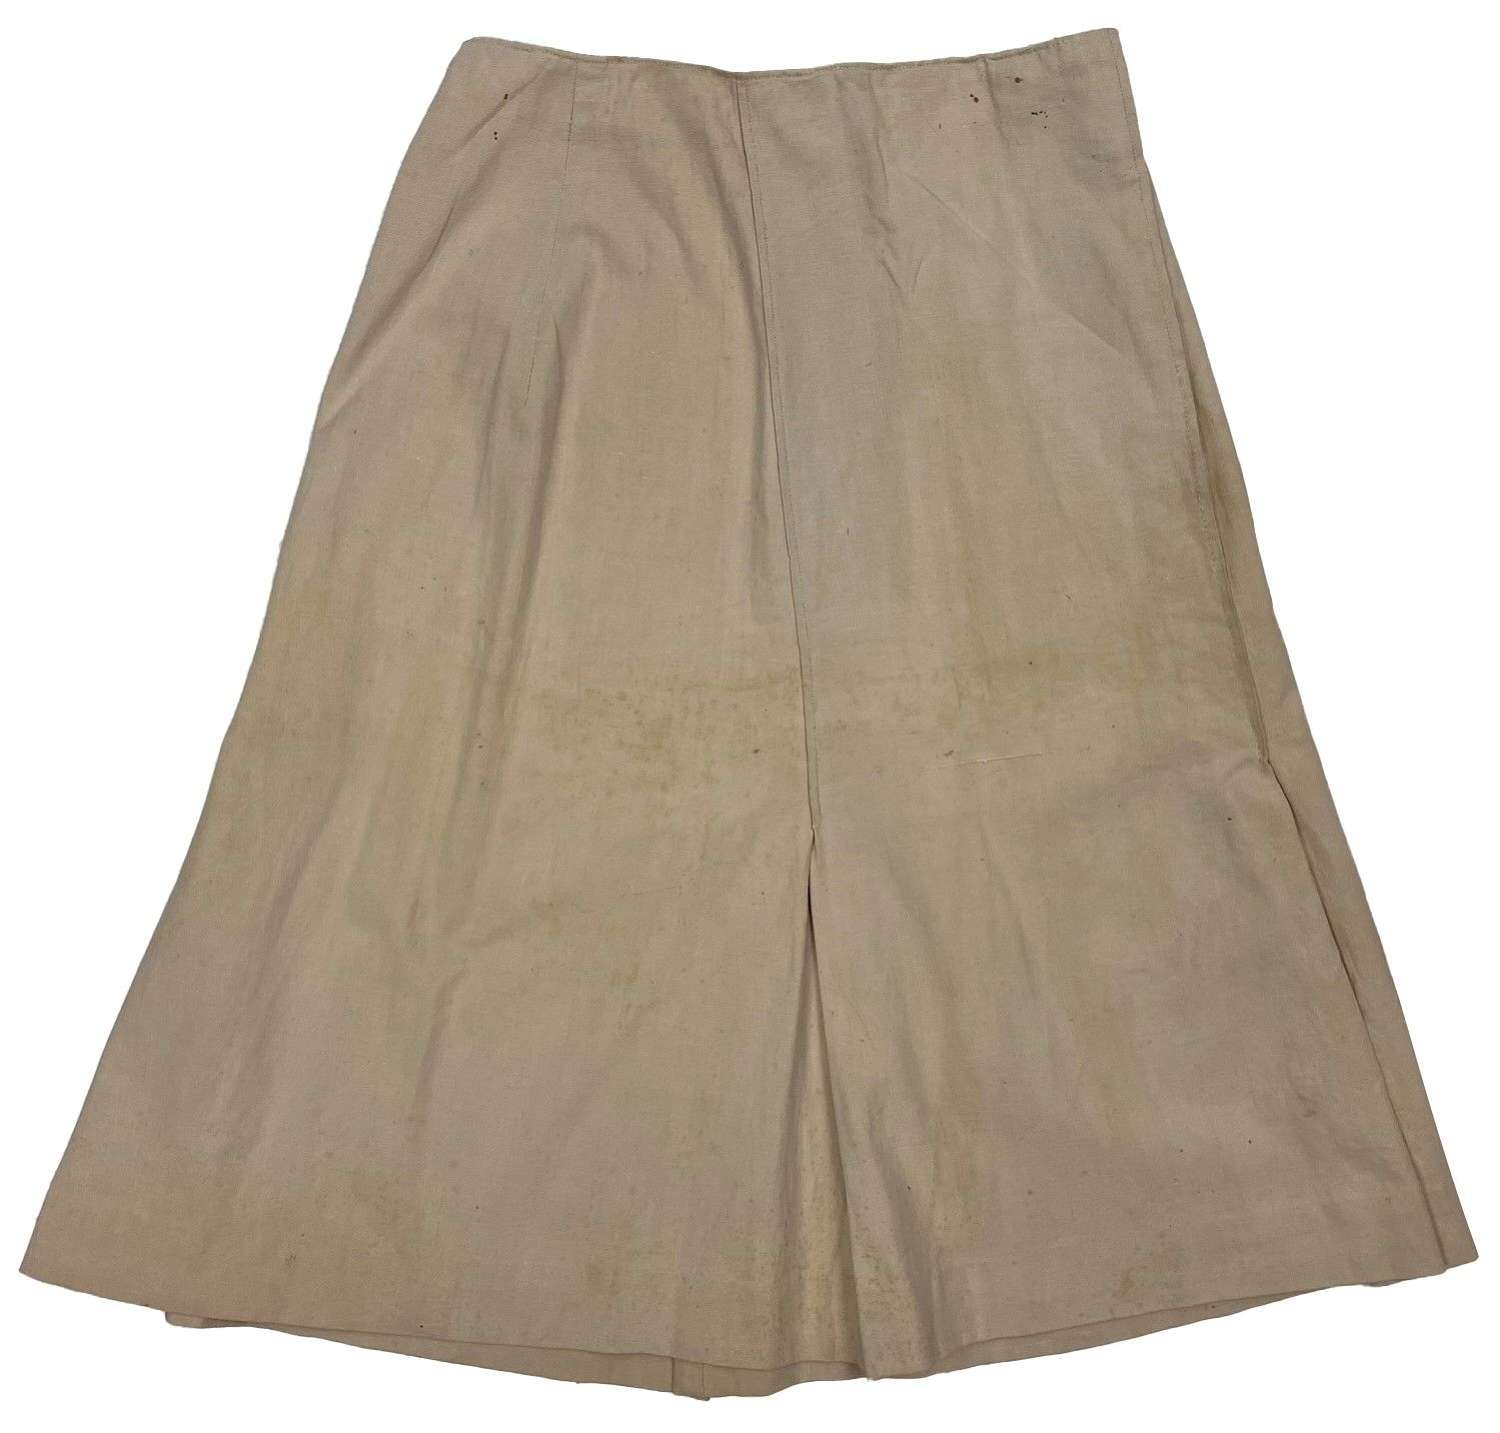 Original 1940s Ladies Beige Skirt